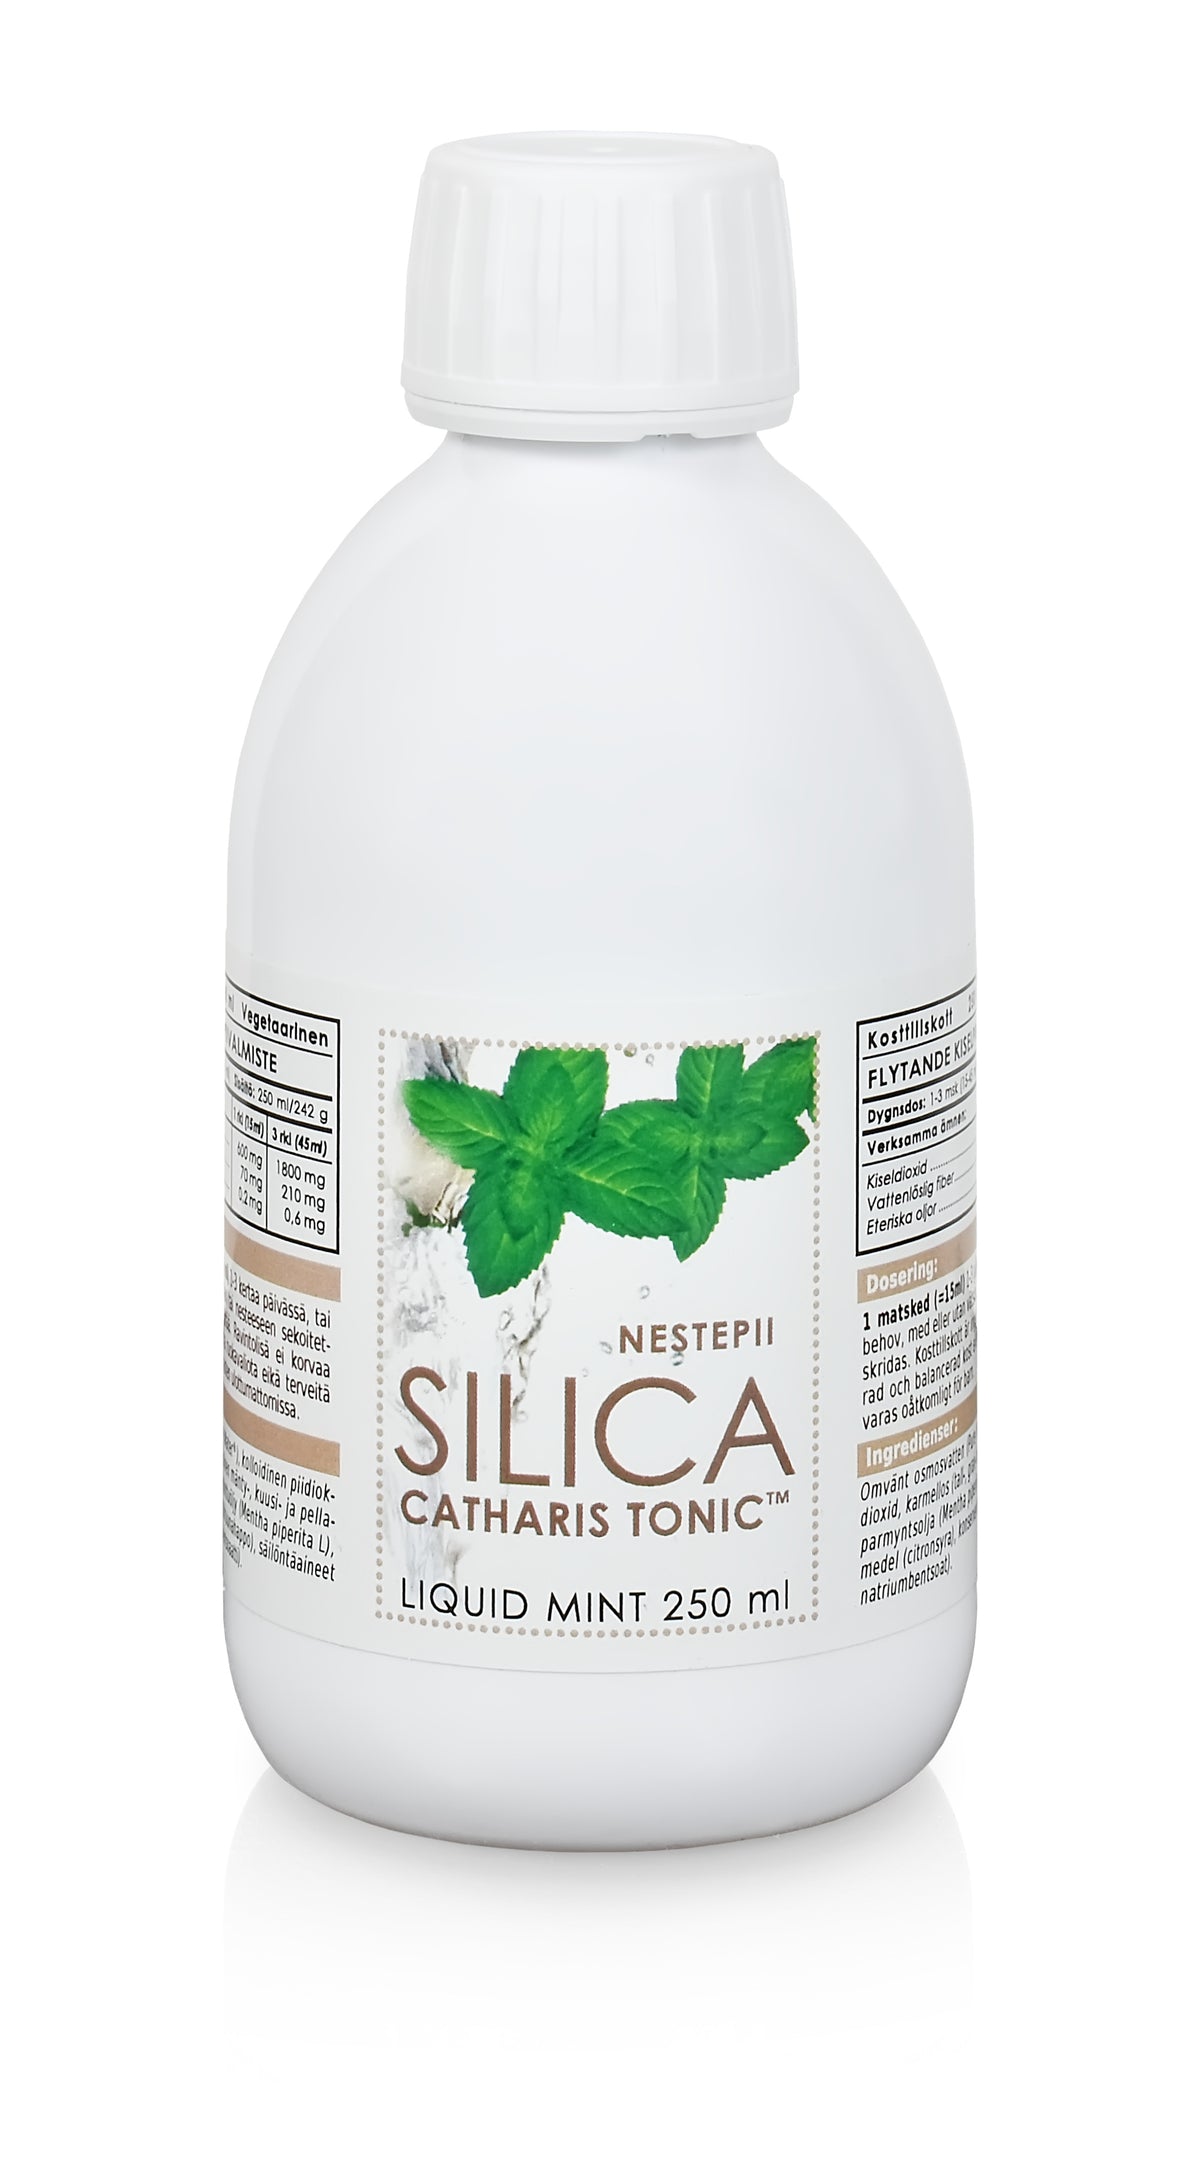 Aboa Medica Silica Liquid Mint - Nestepii 250 ml